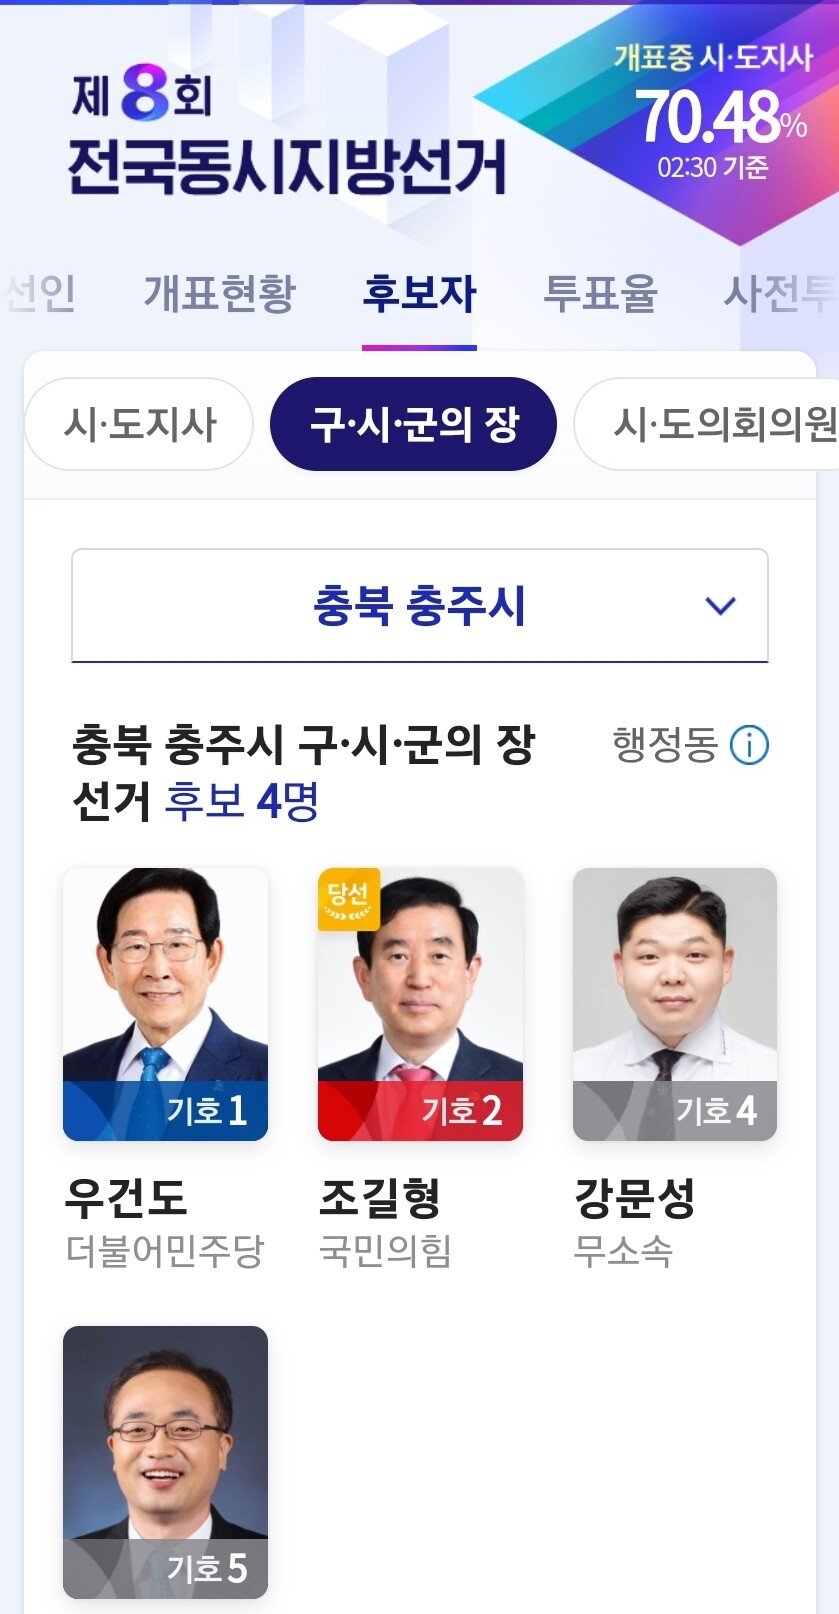 Kim Sun-tae, a public relations officer in Chungju